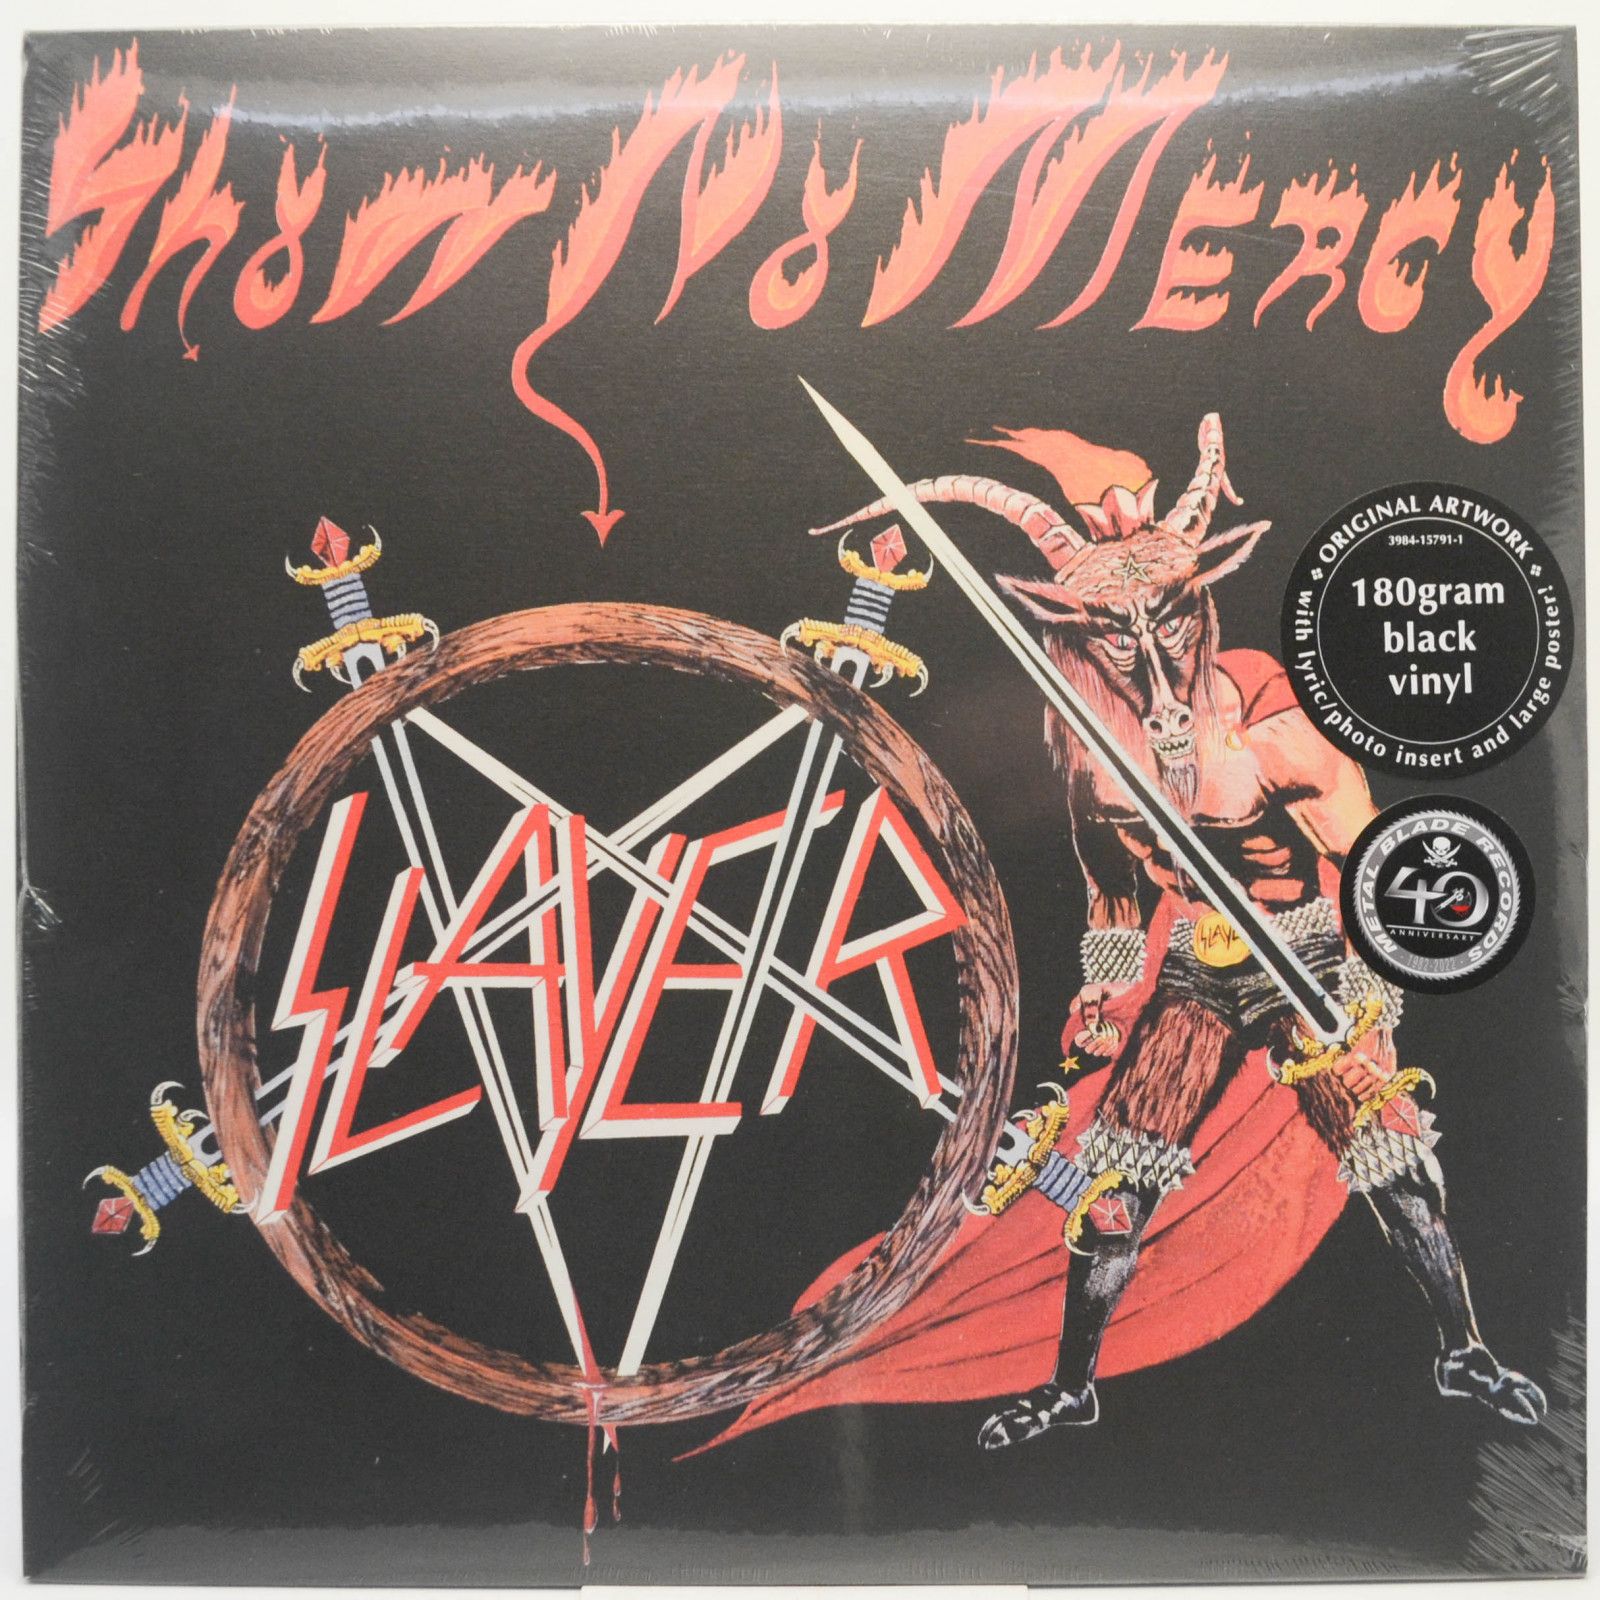 Slayer — Show No Mercy, 1983